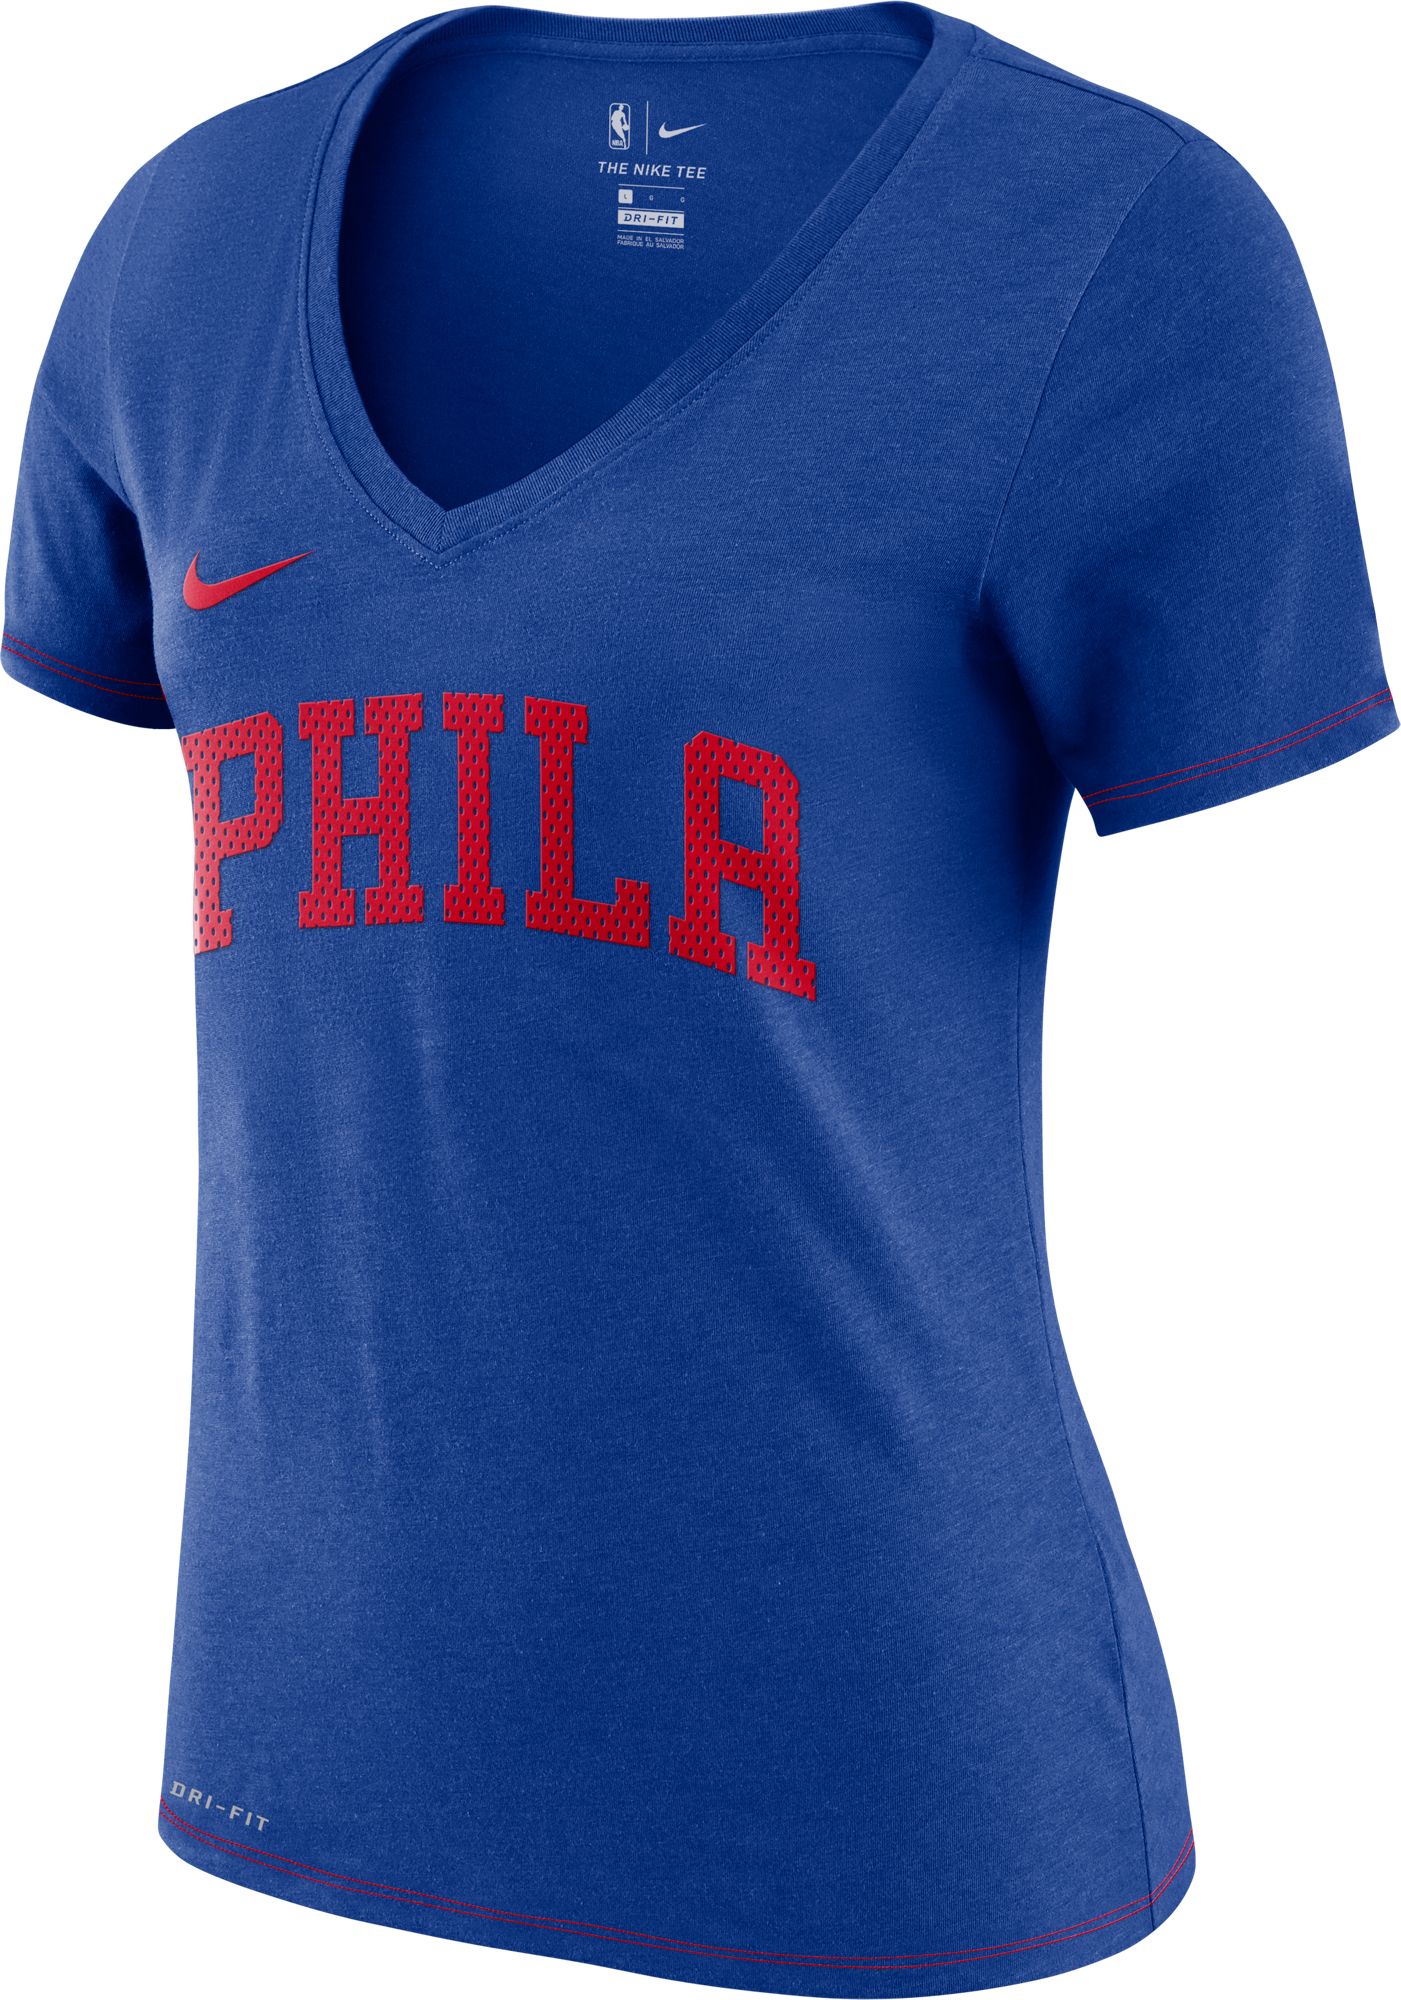 philadelphia 76ers women's apparel